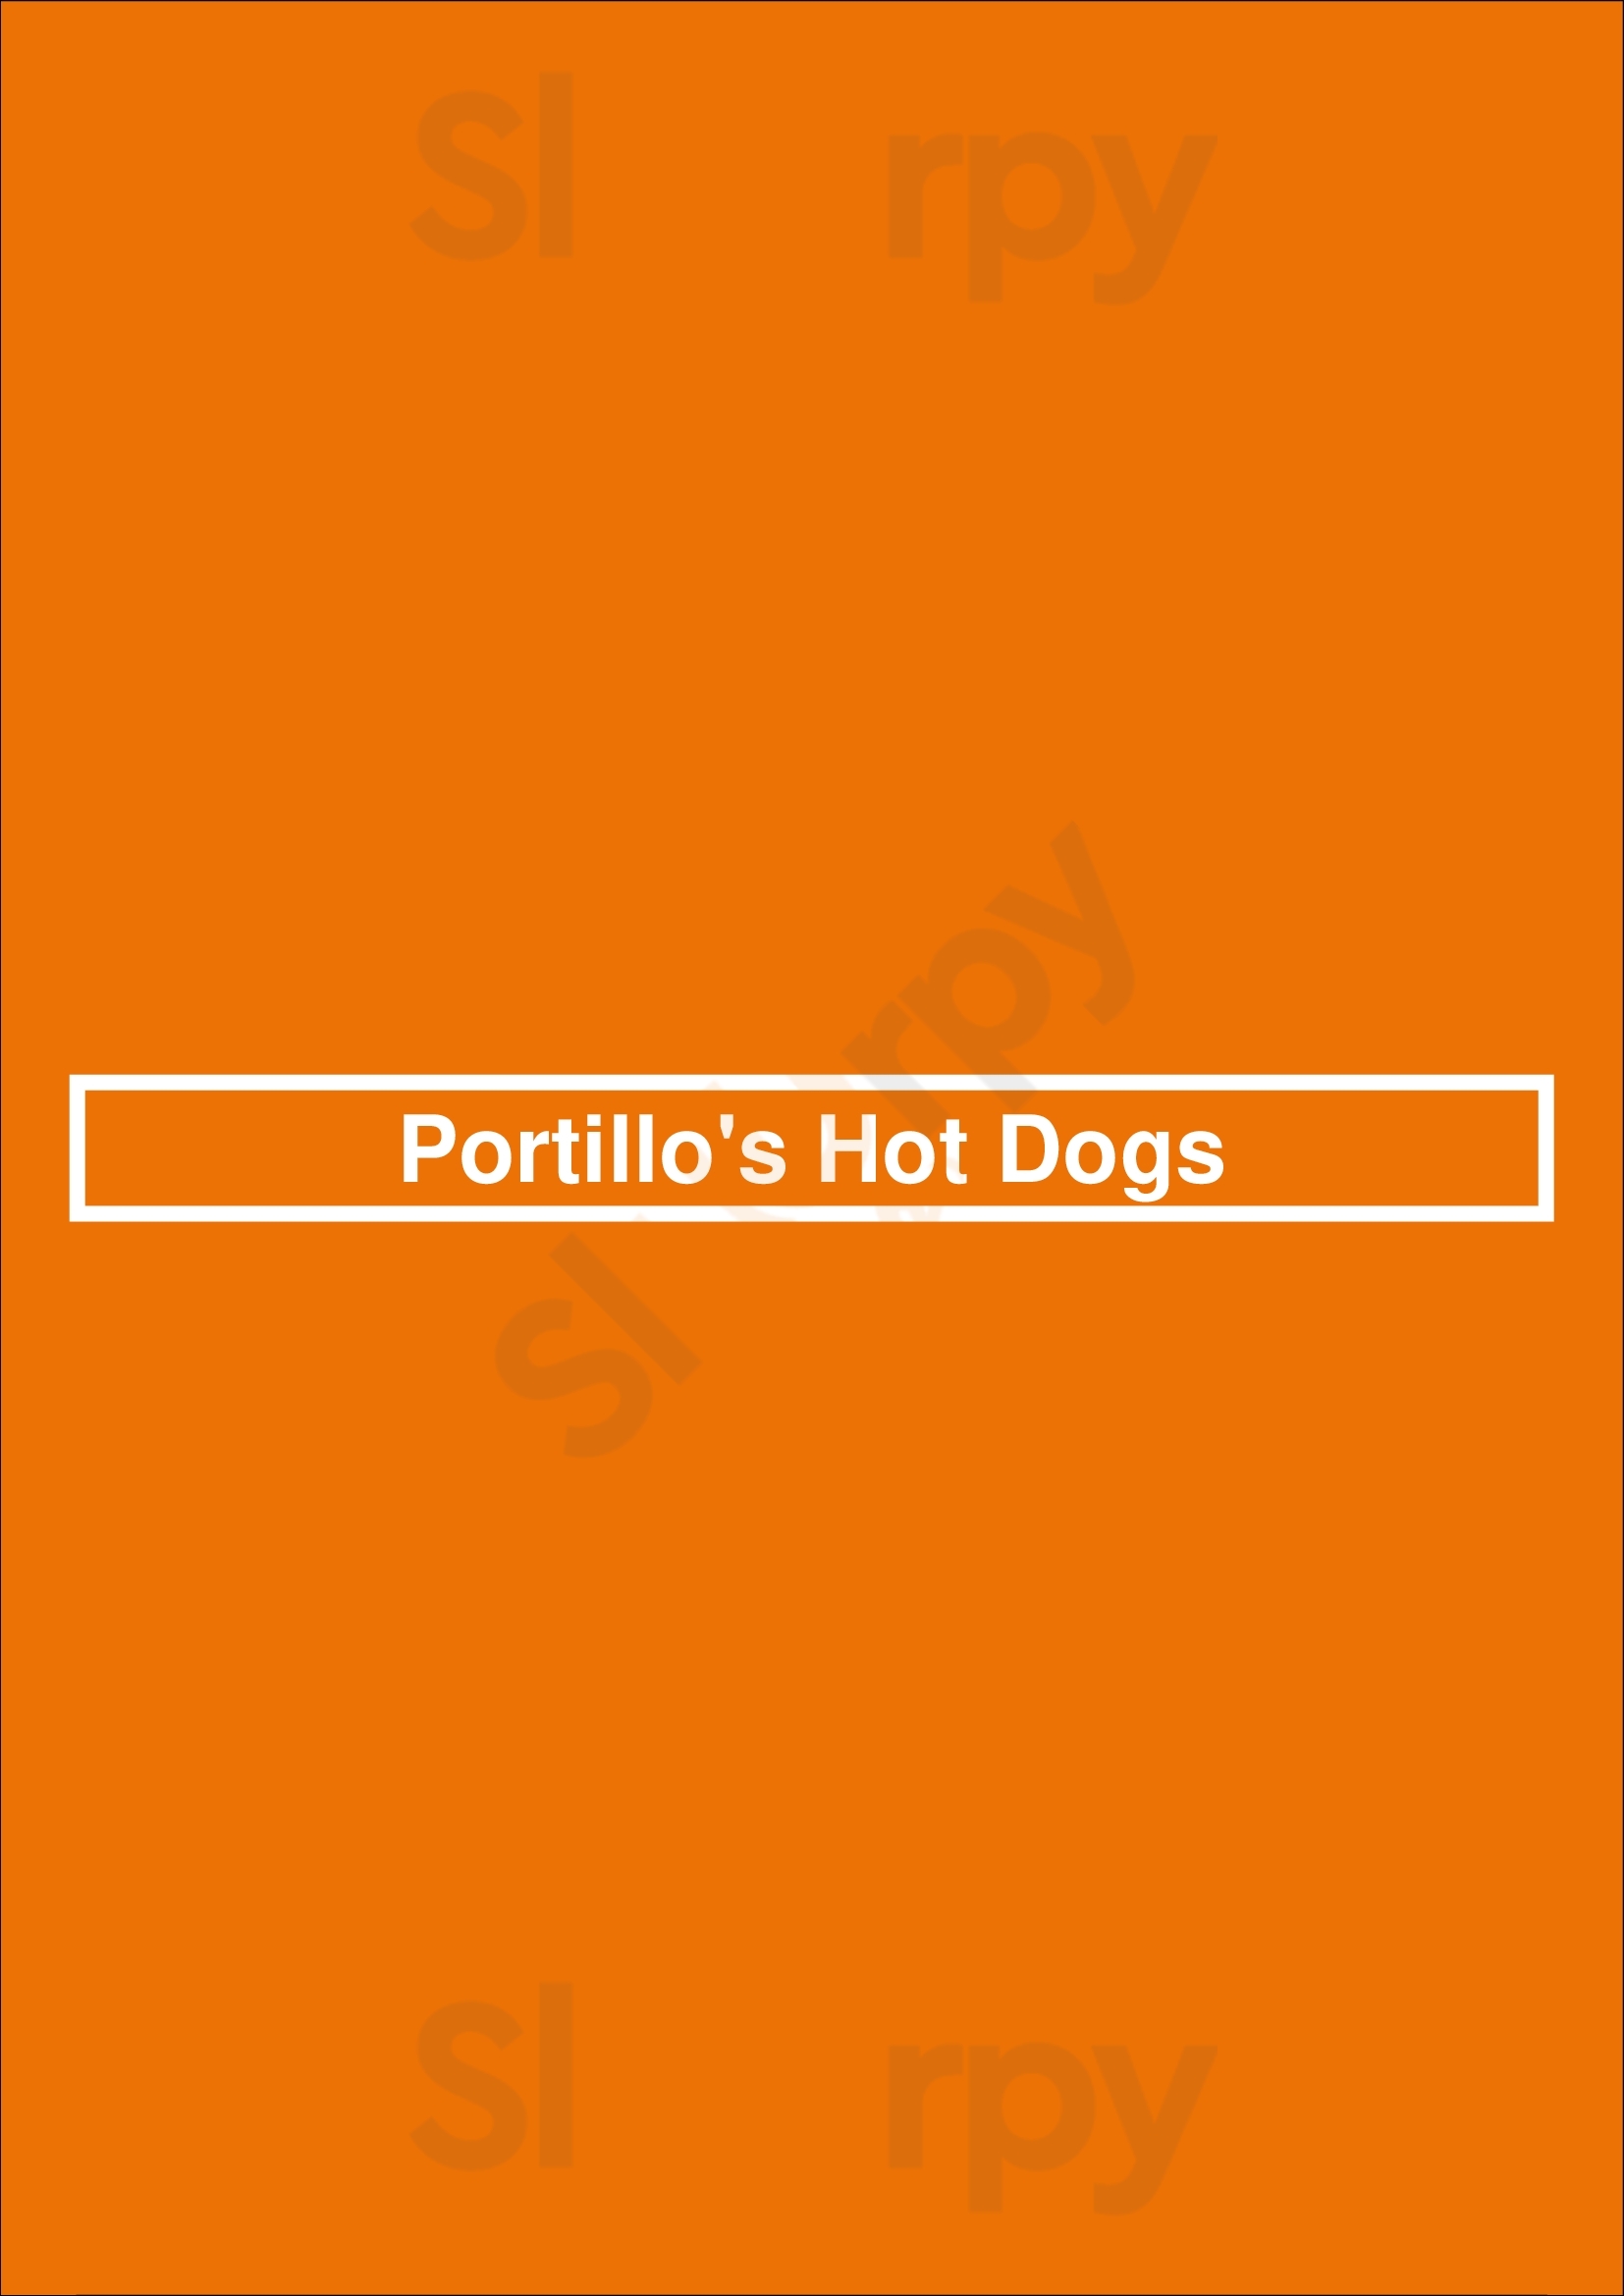 Portillo's Hot Dogs Indianapolis Menu - 1